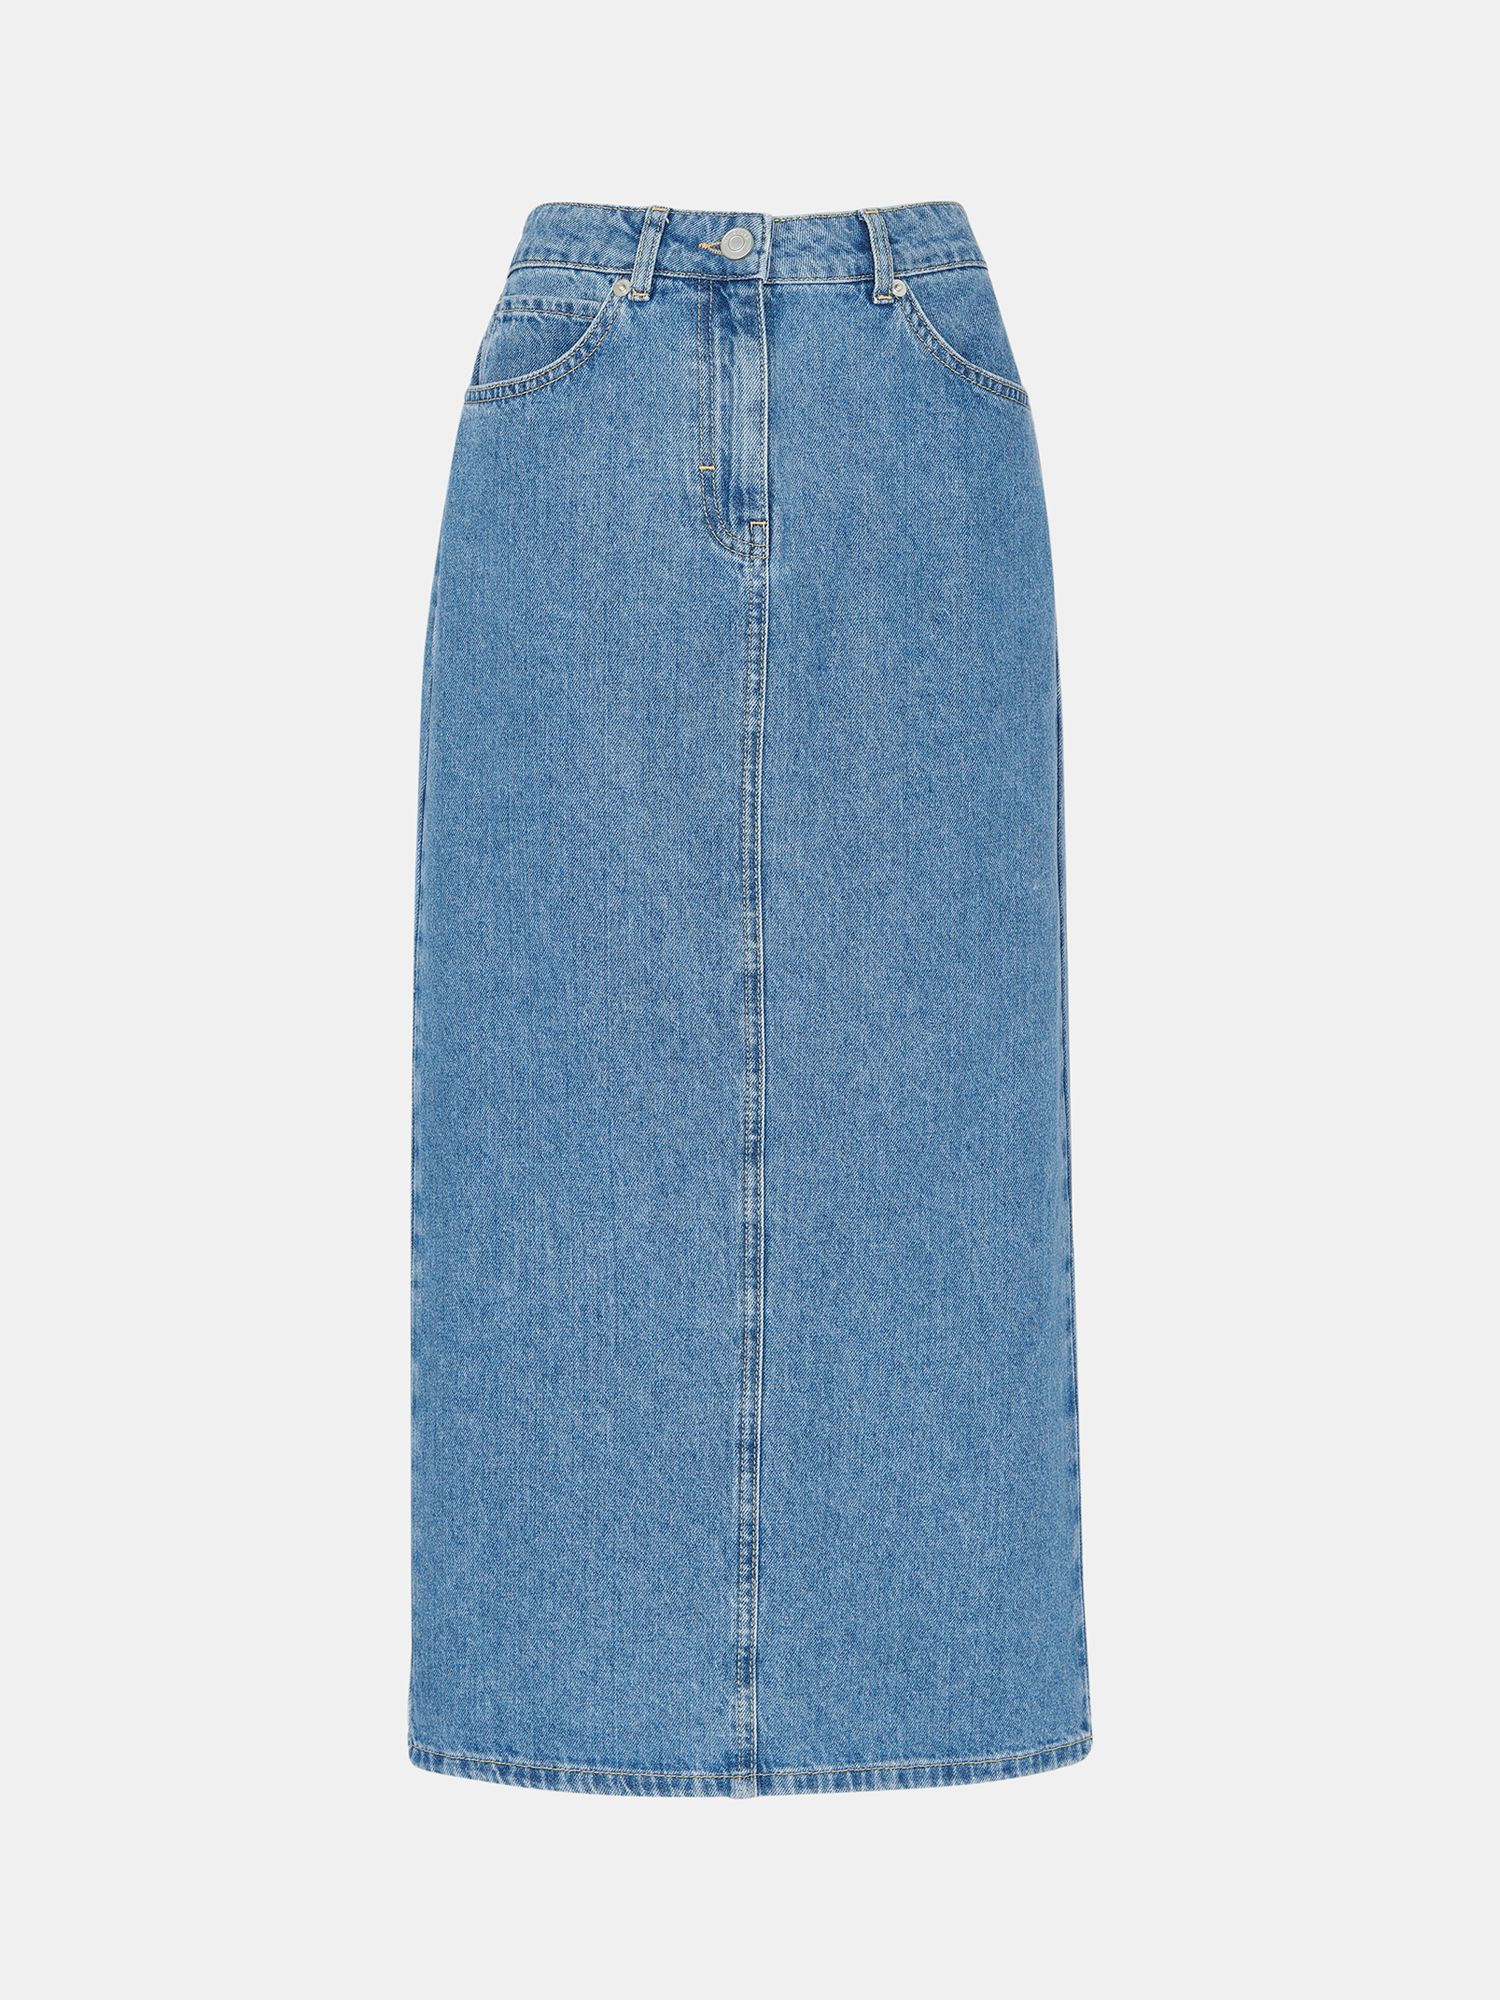 Whistles Cotton Straight Midi Skirt, Denim at John Lewis & Partners